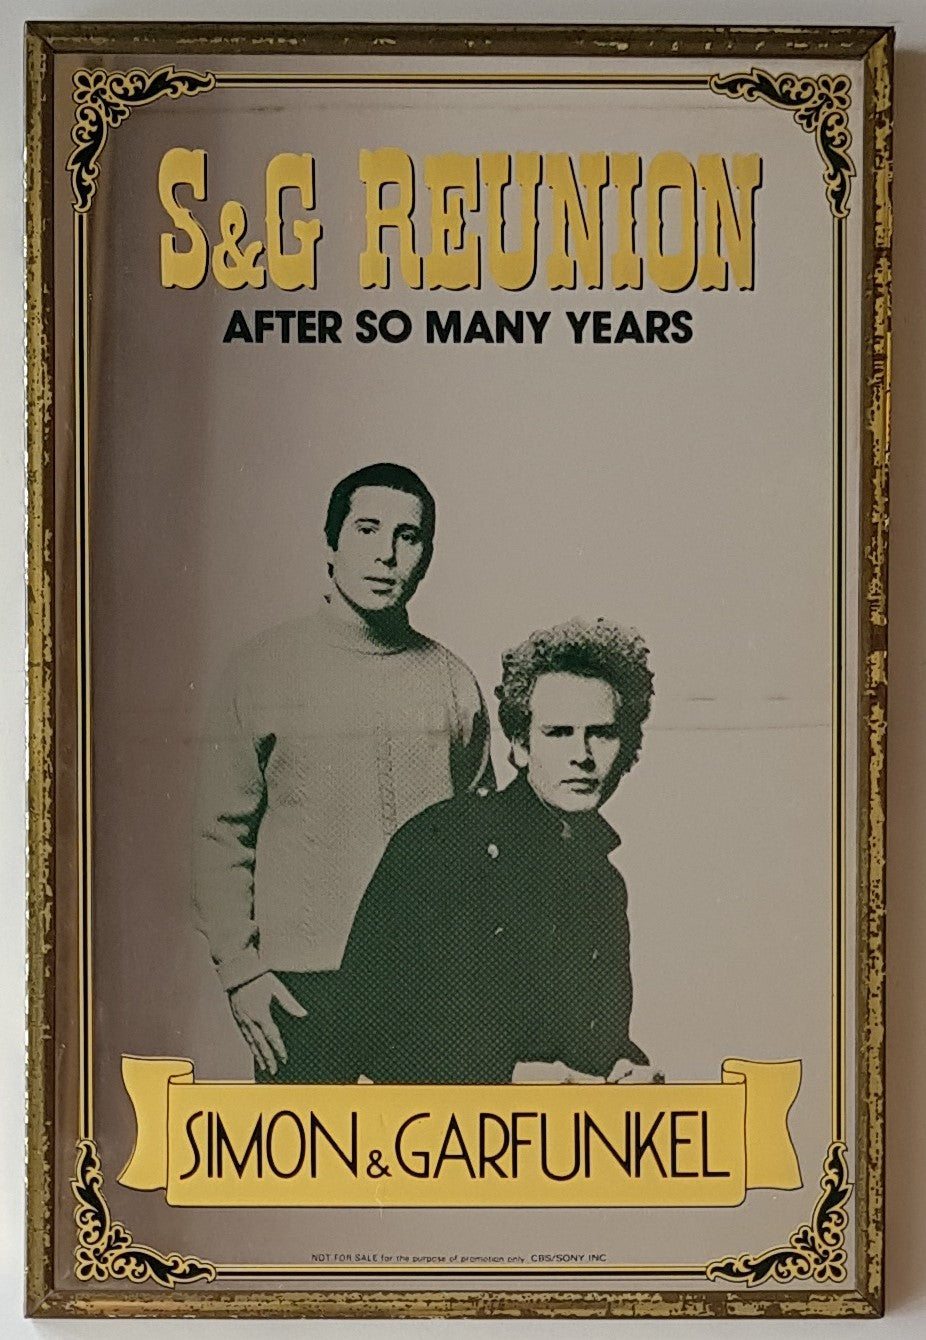 Simon & Garfunkel - S & G Reunion After So Many Years